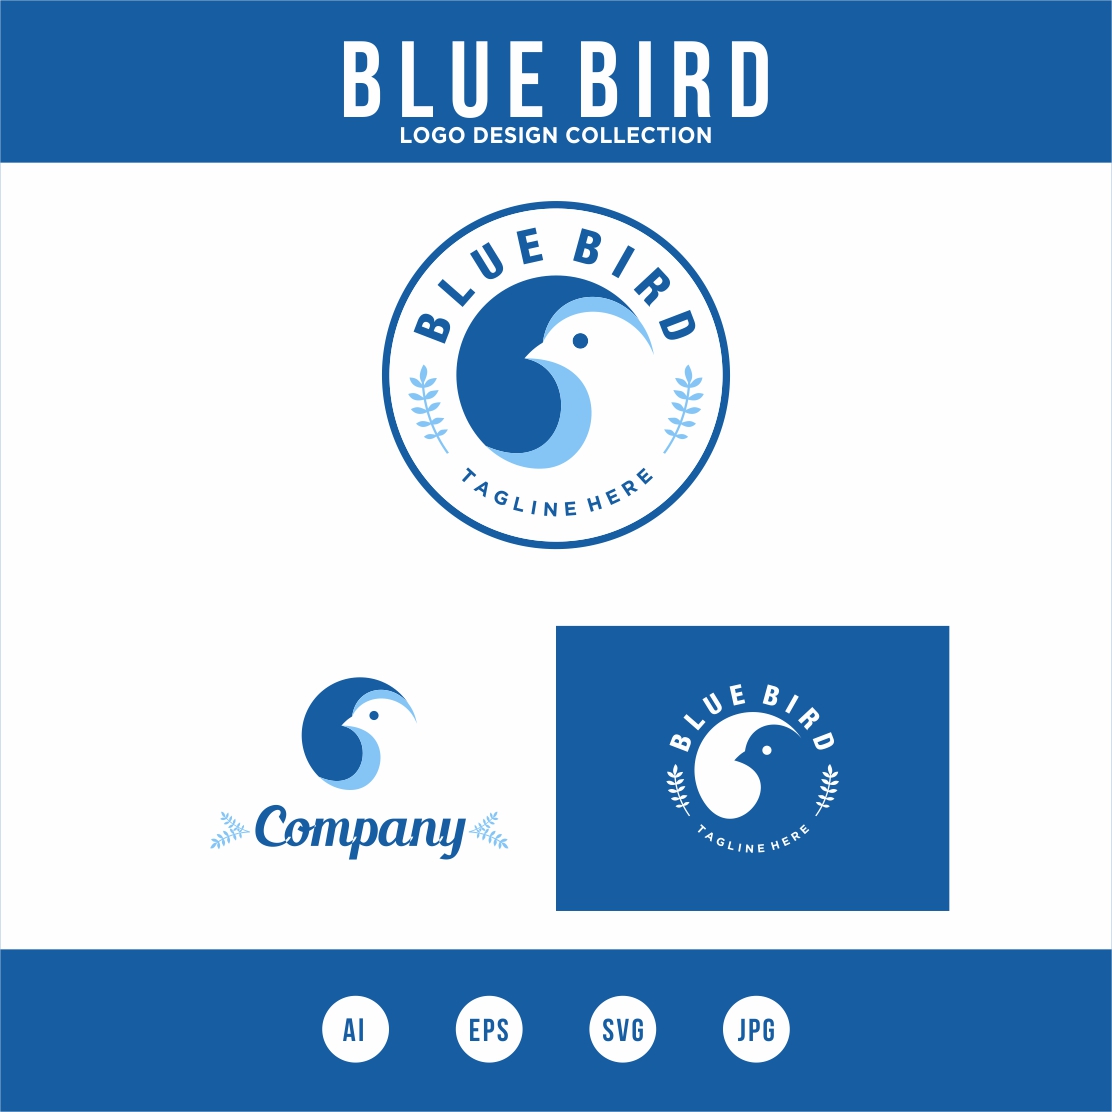 Bird logo Design Collection - only 10$ cover image.